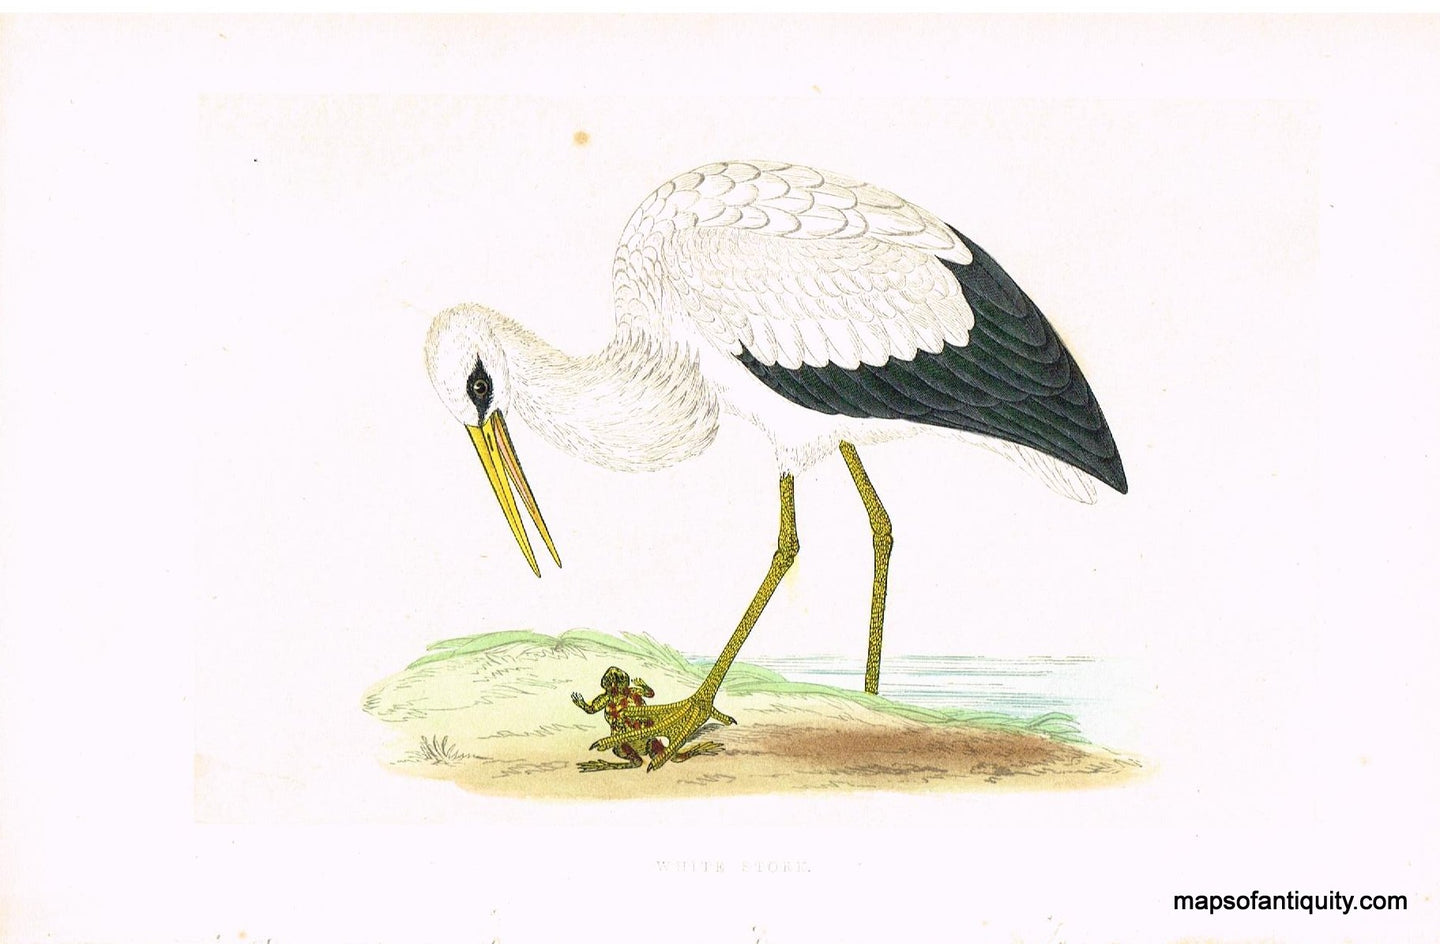 Antique-Hand-Colored-Engraved-Illustration-White-Stork-Morris-bird-Natural-History-Birds-1851-Morris-Maps-Of-Antiquity